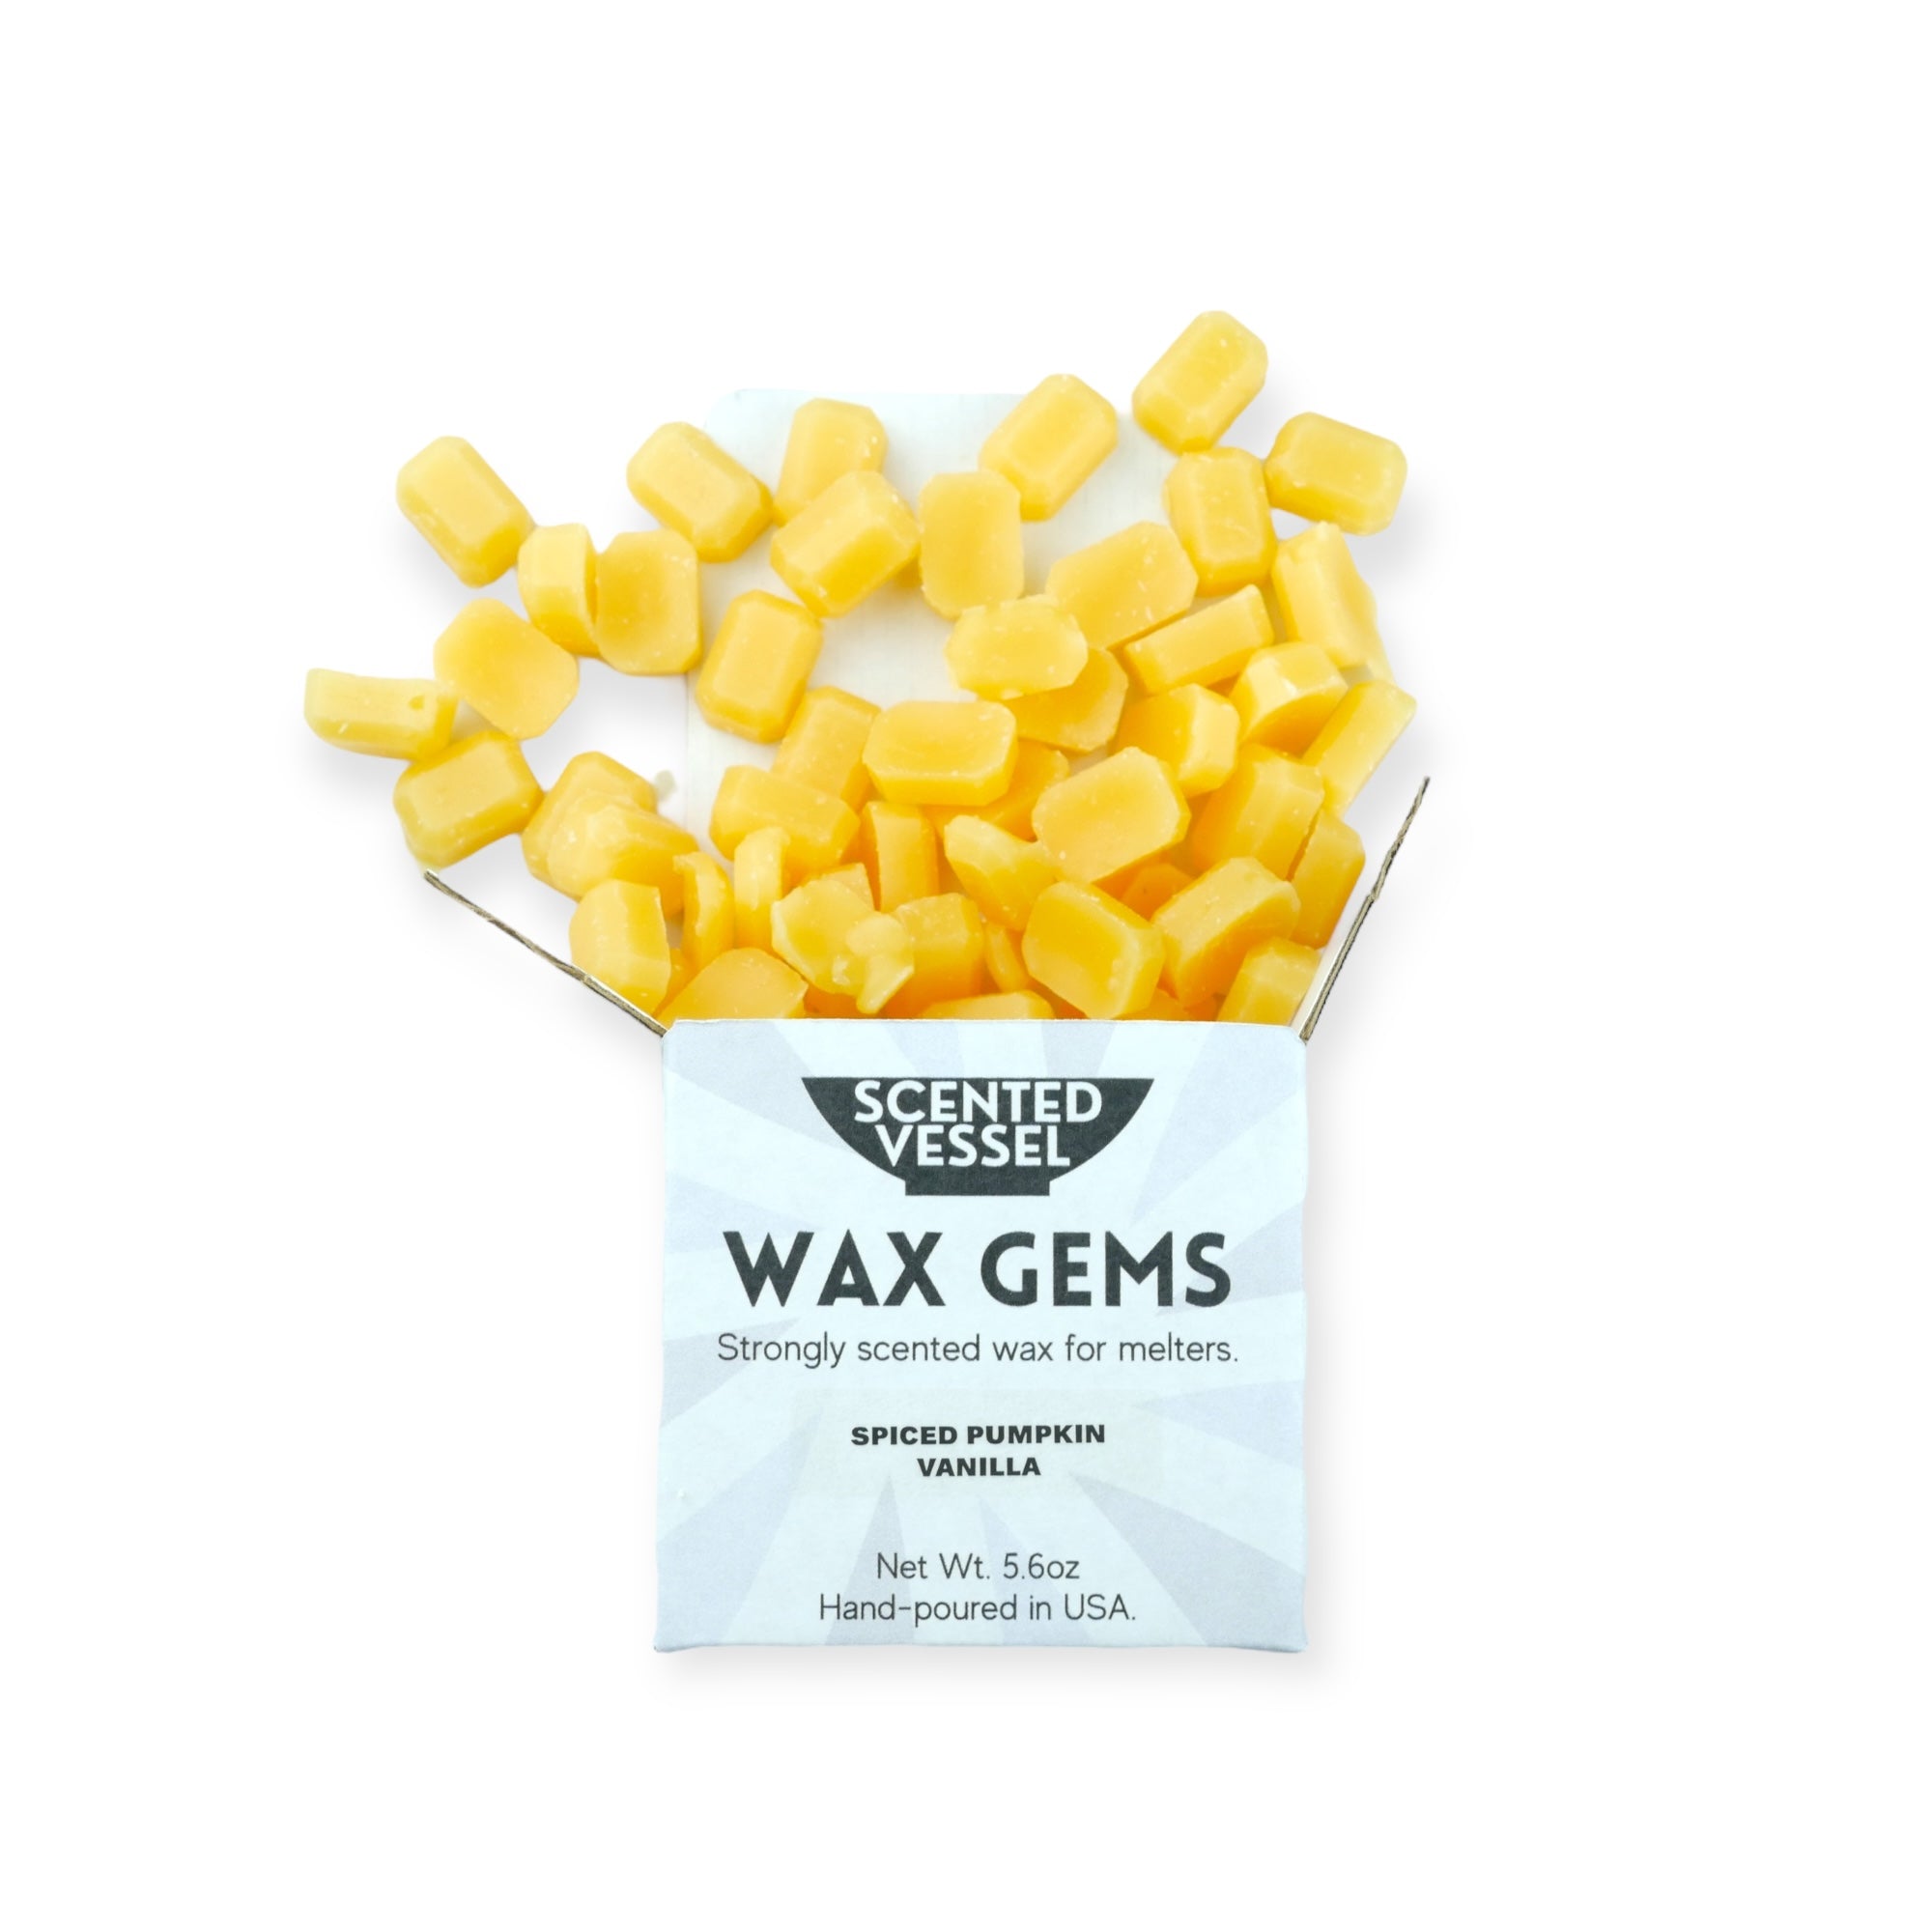 Spiced Pumpkin Vanilla 5.6oz Wax Gems by Scented Vessel